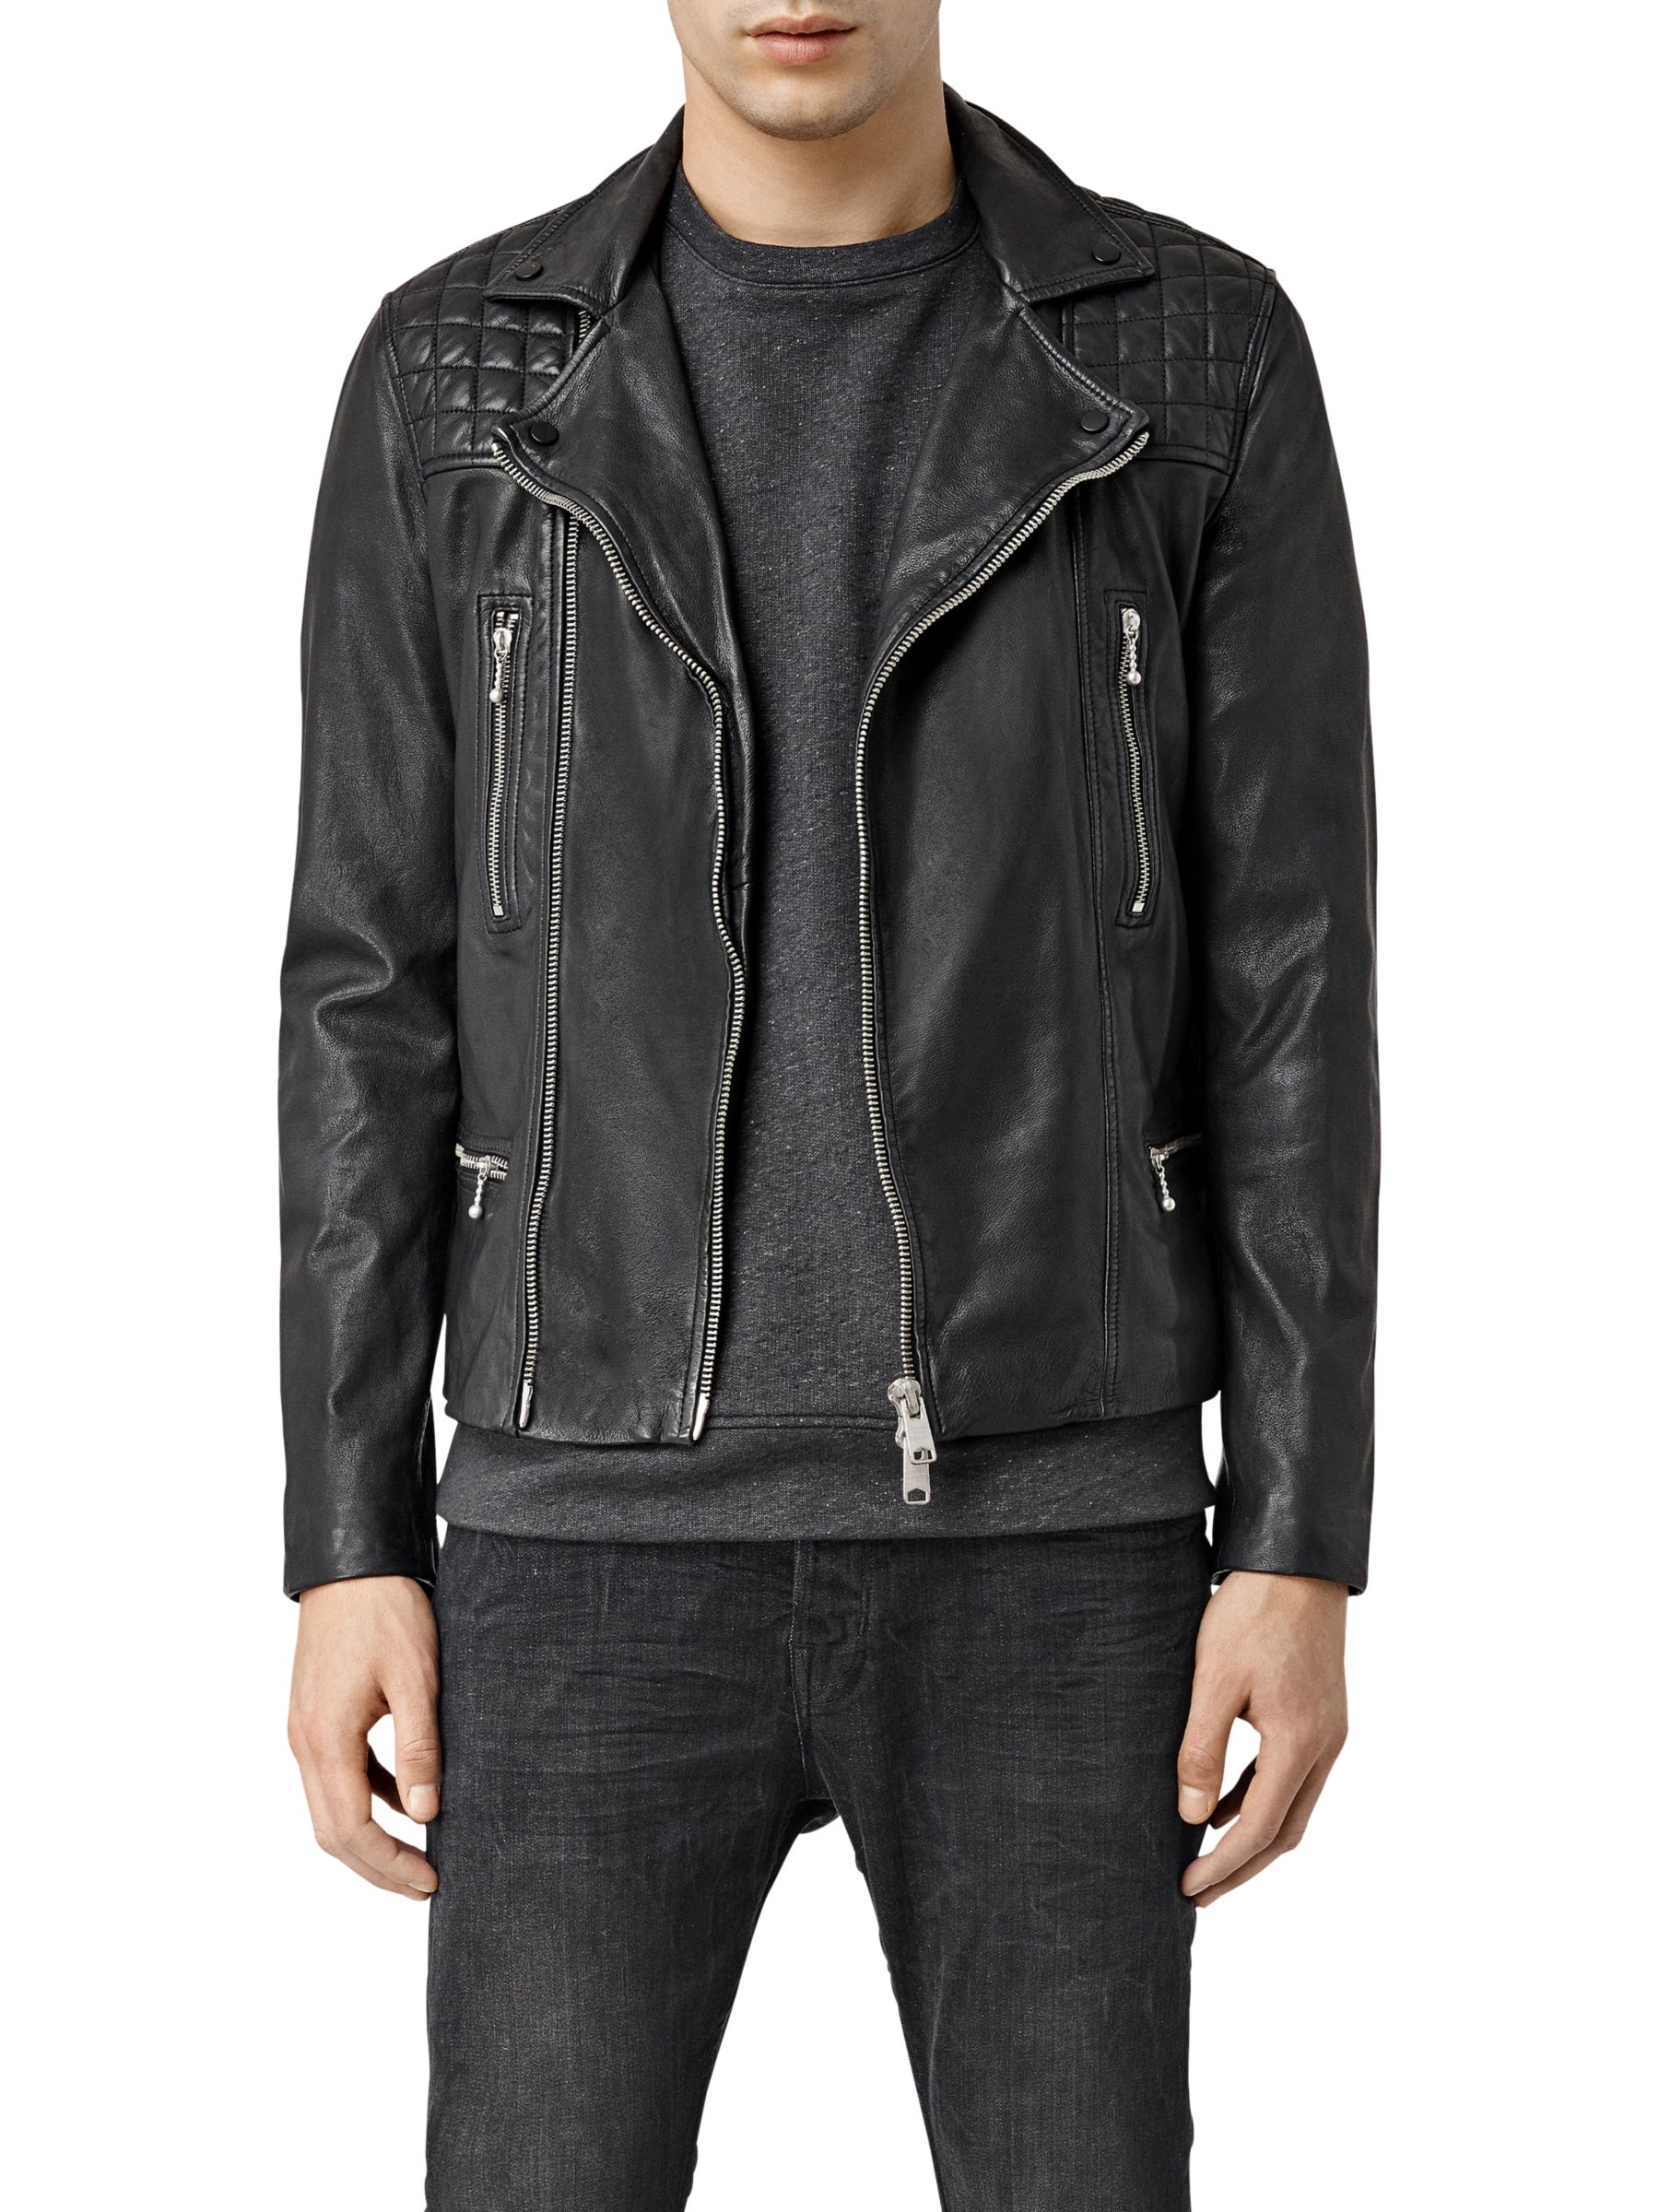 AllSaints Rowley Leather Biker Jacket, Black